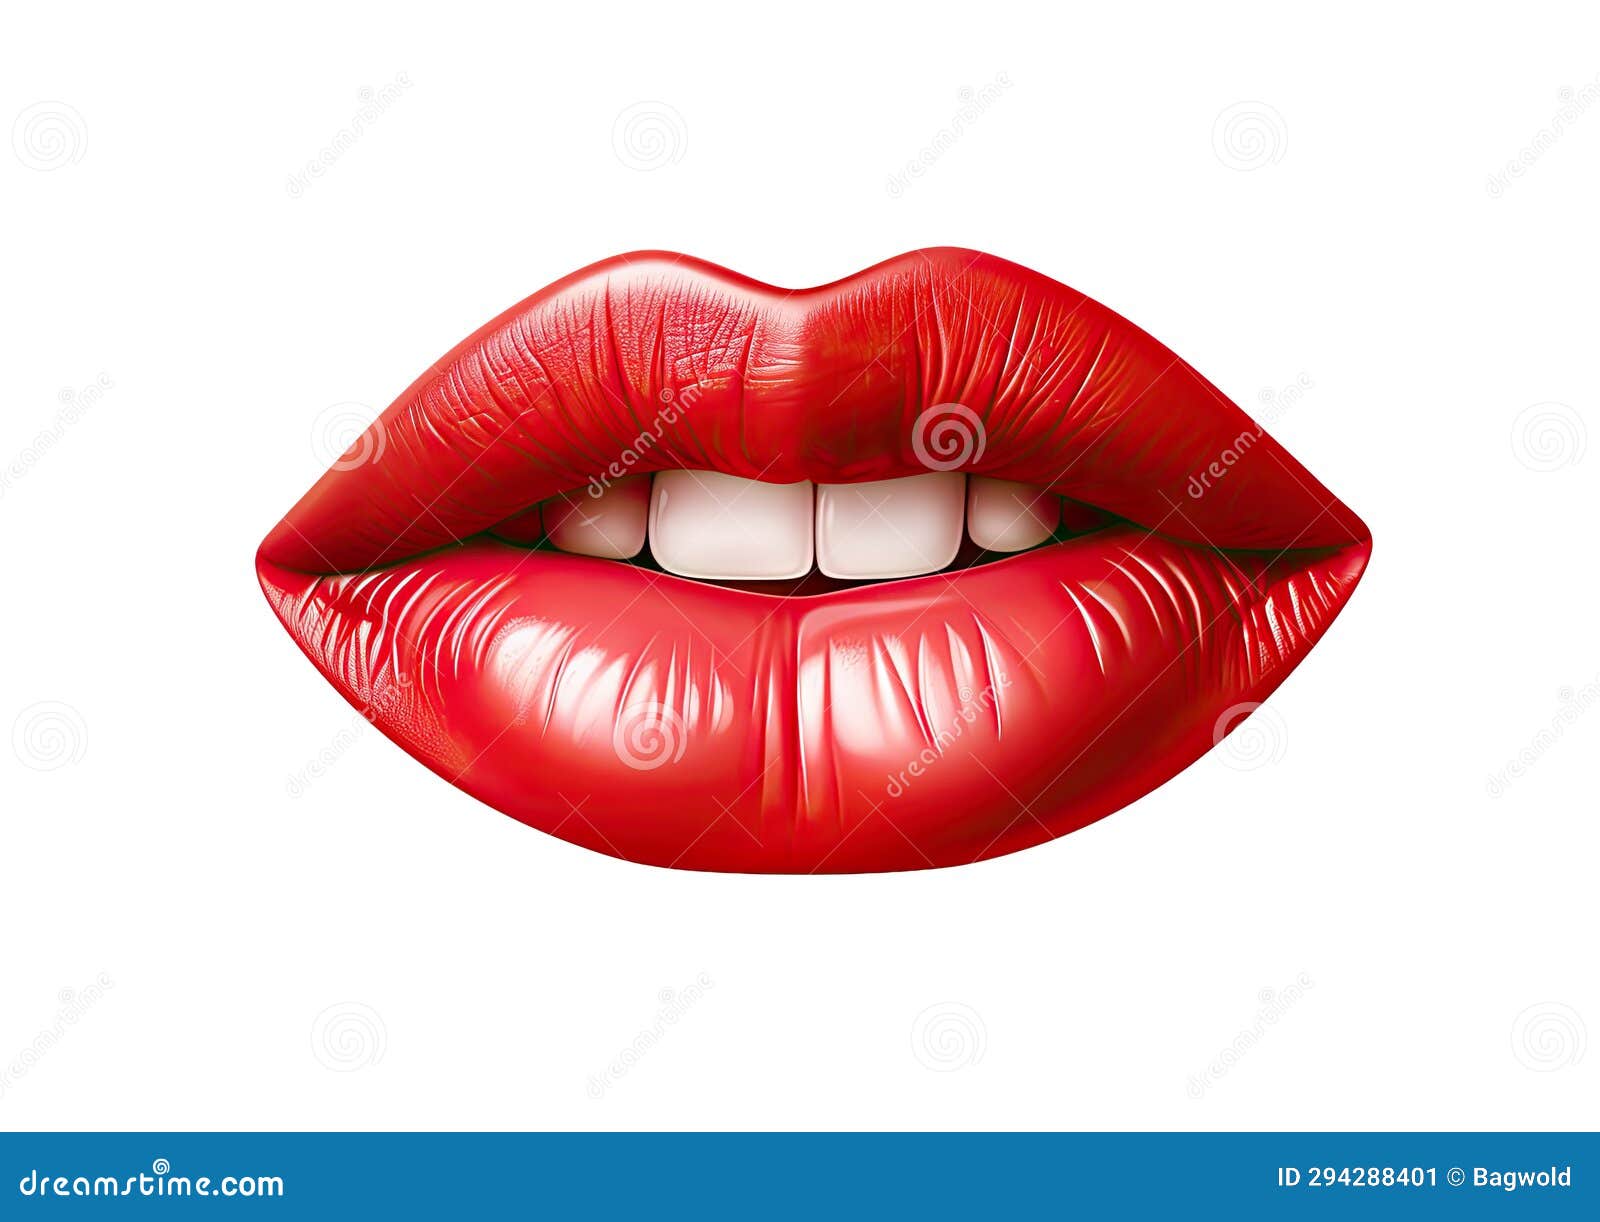 Lips Coloring Pages 20 Weird Kissing Colorings Image - Desenhos De